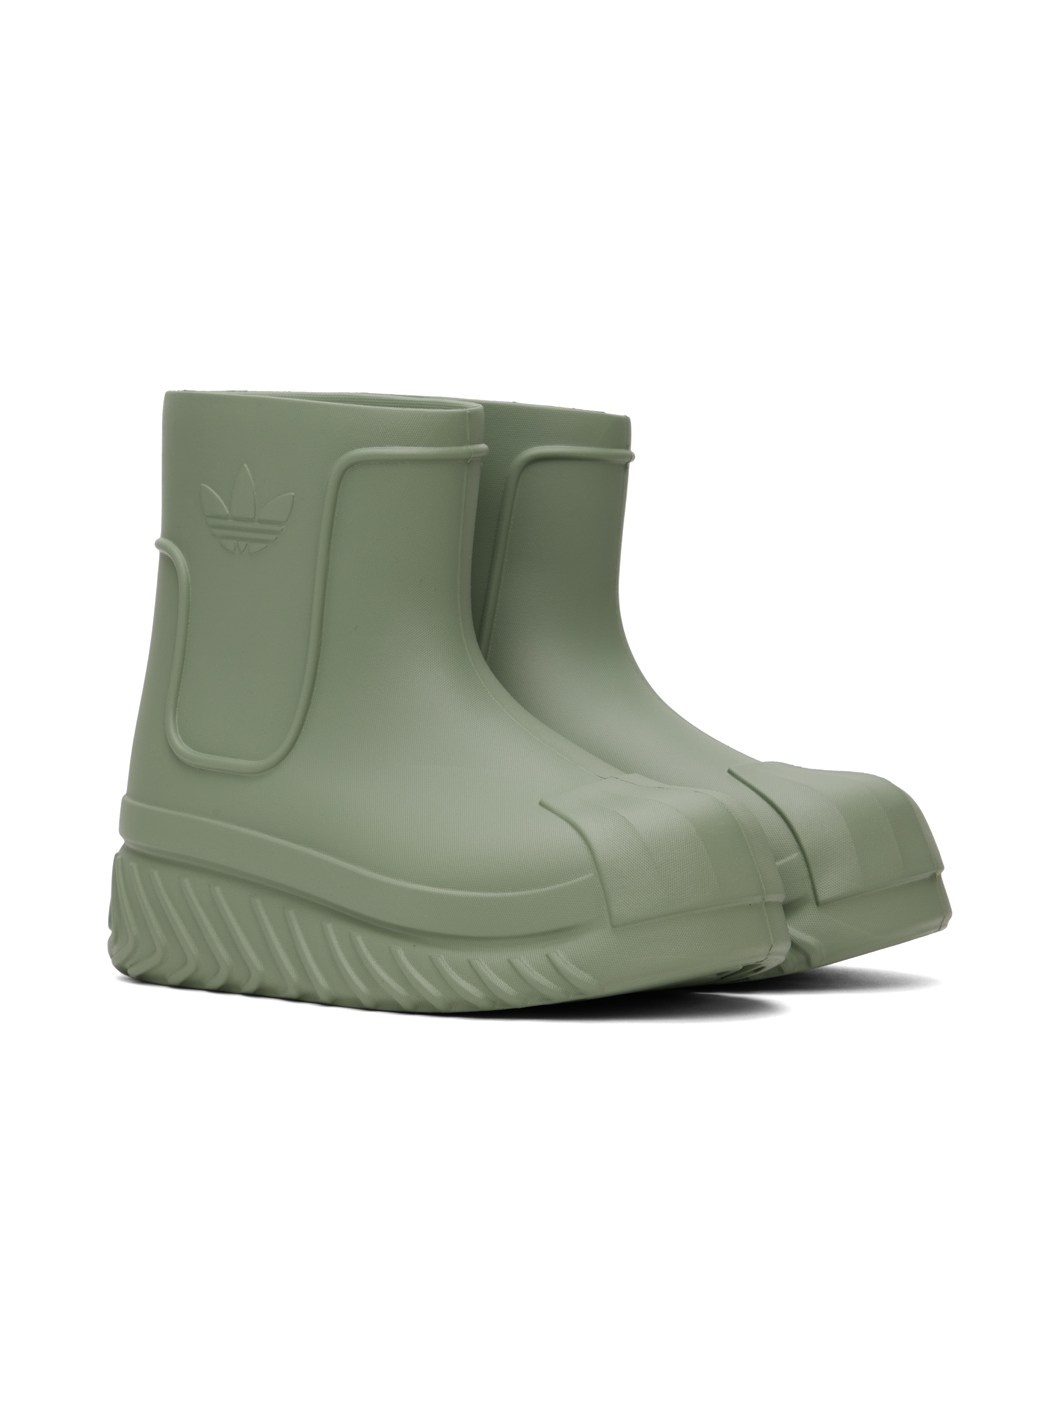 Green AdiFOM Superstar Boots - 4